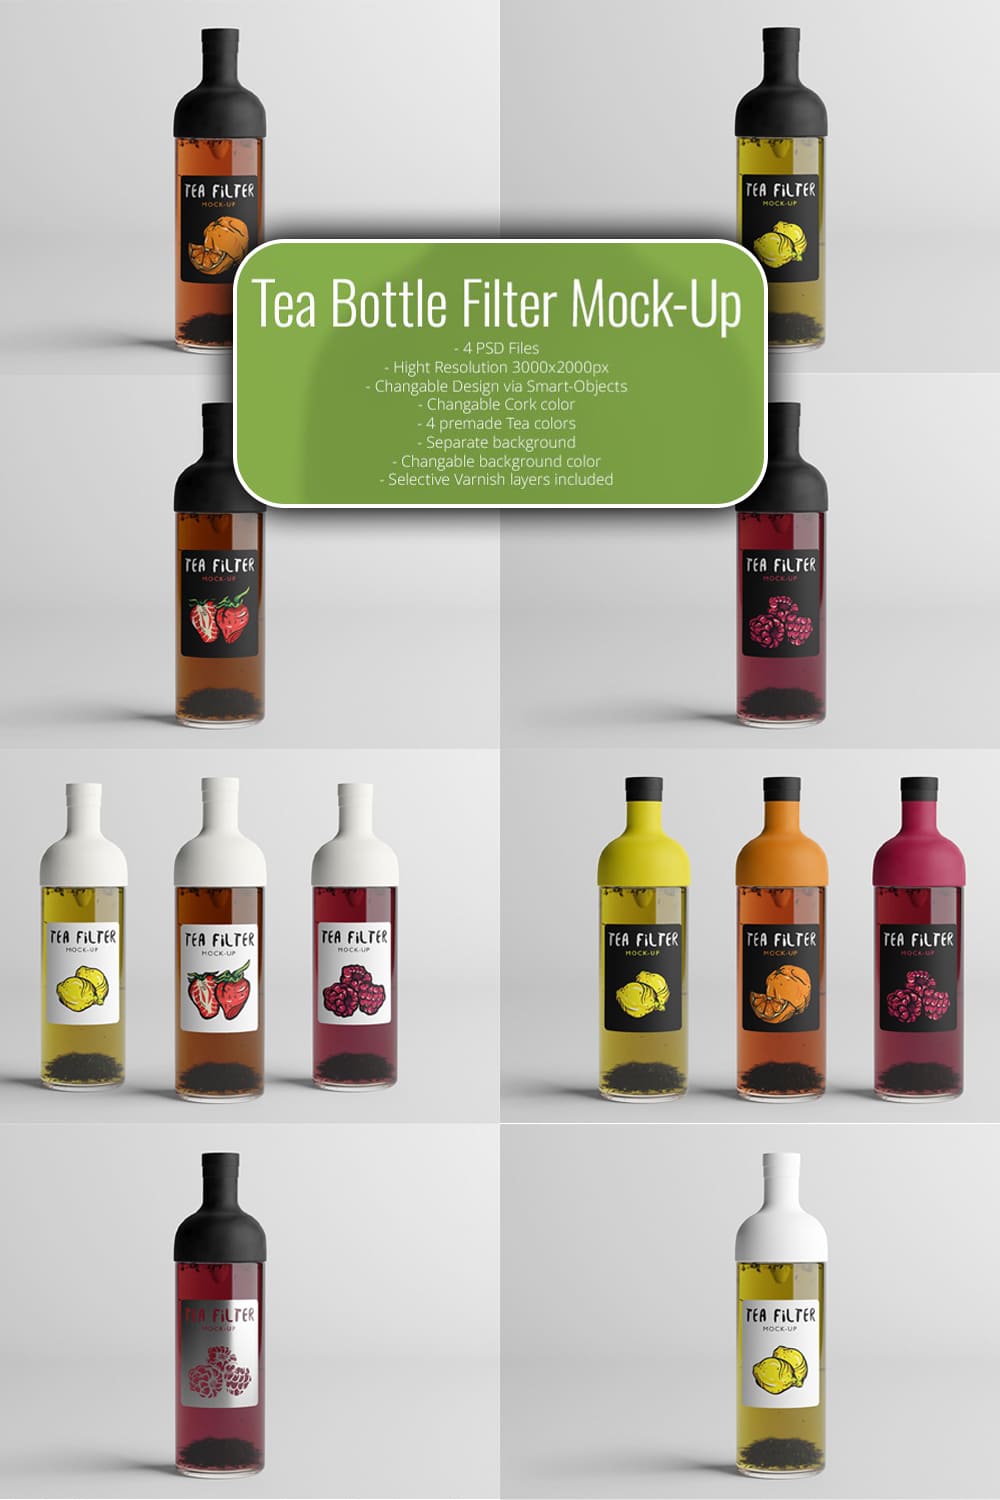 1047377 tea bottle filter mock up pinterest 1000 1500